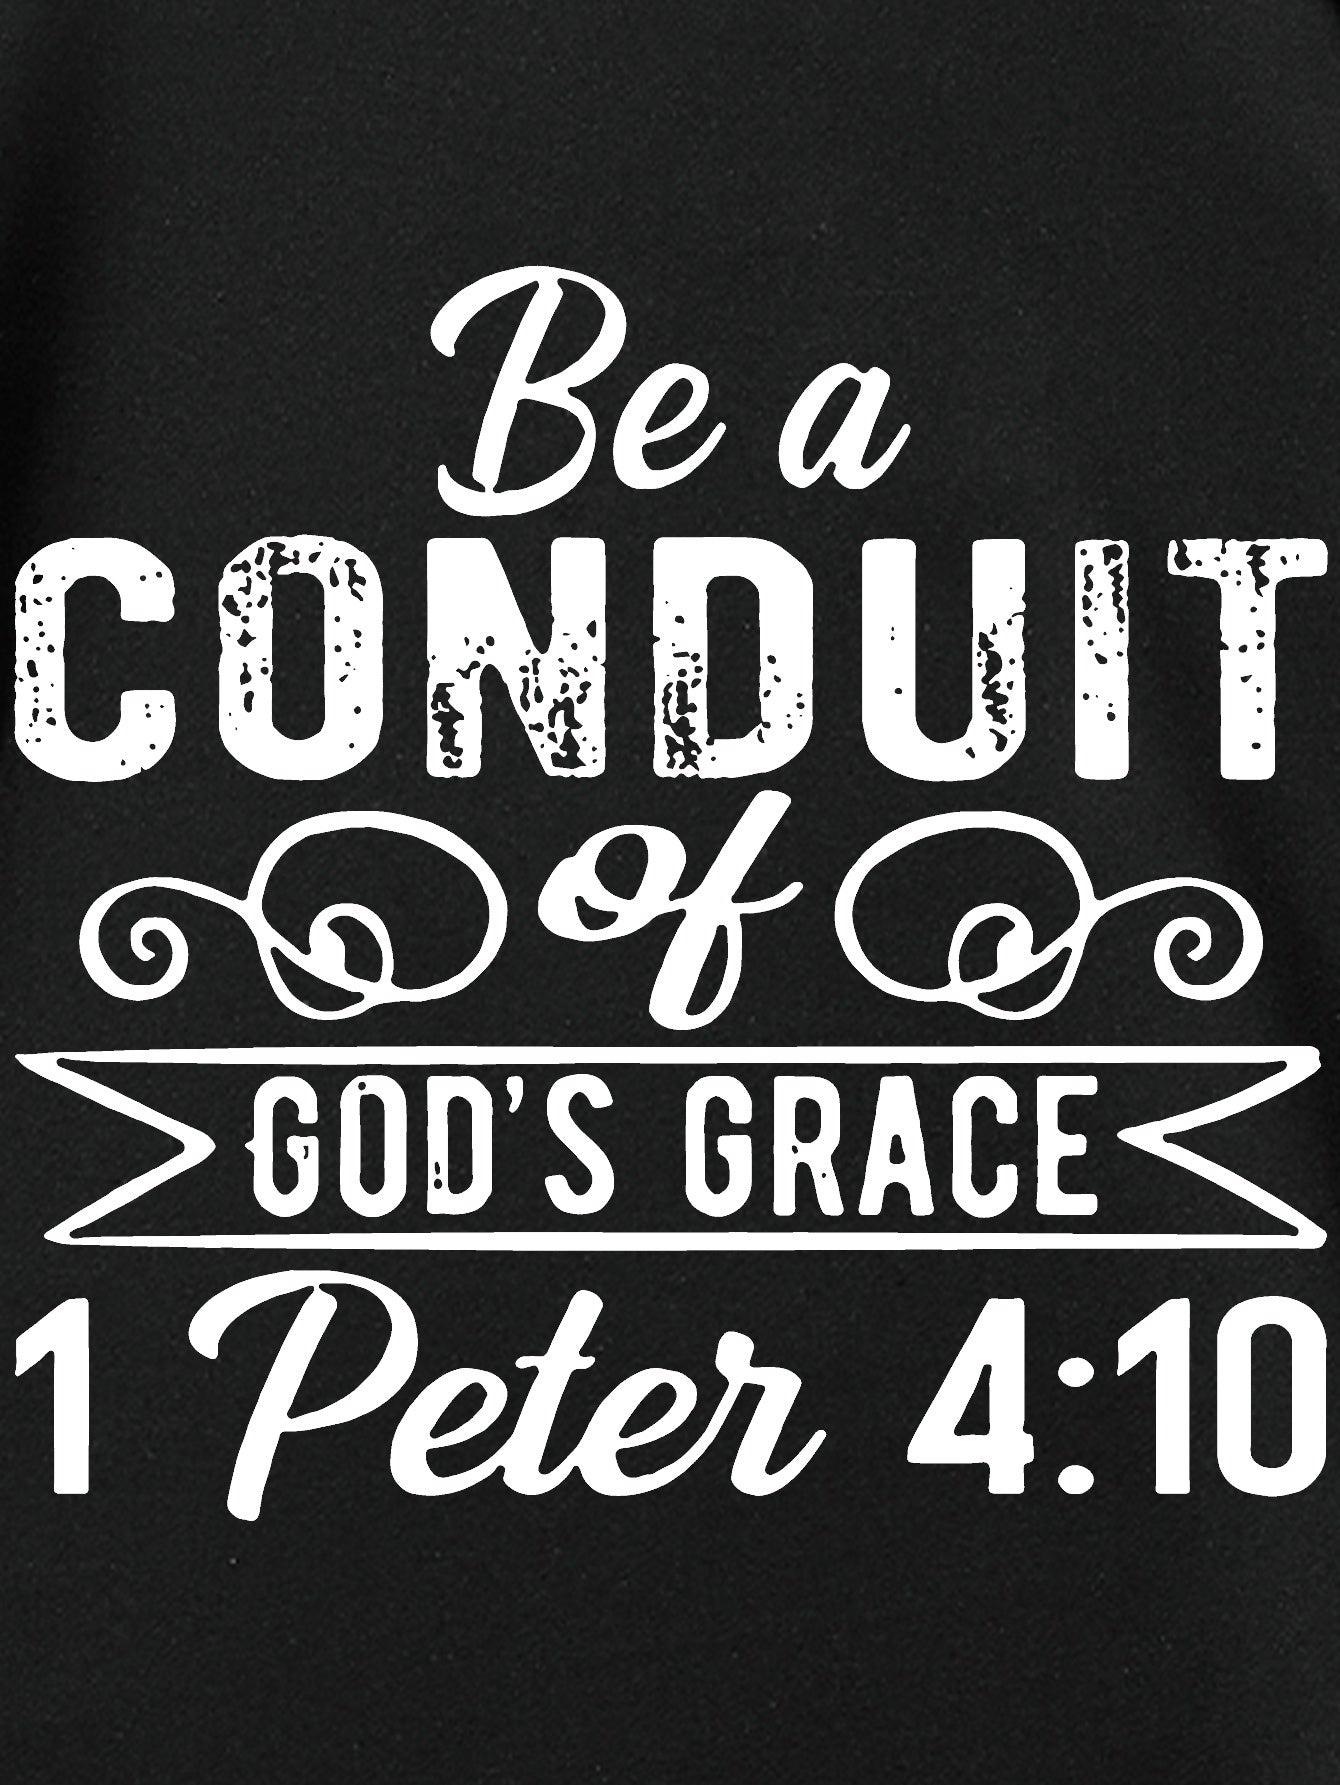 1 Peter 4:10 Be A Conduit Of God's Grace Men's Christian T-shirt claimedbygoddesigns